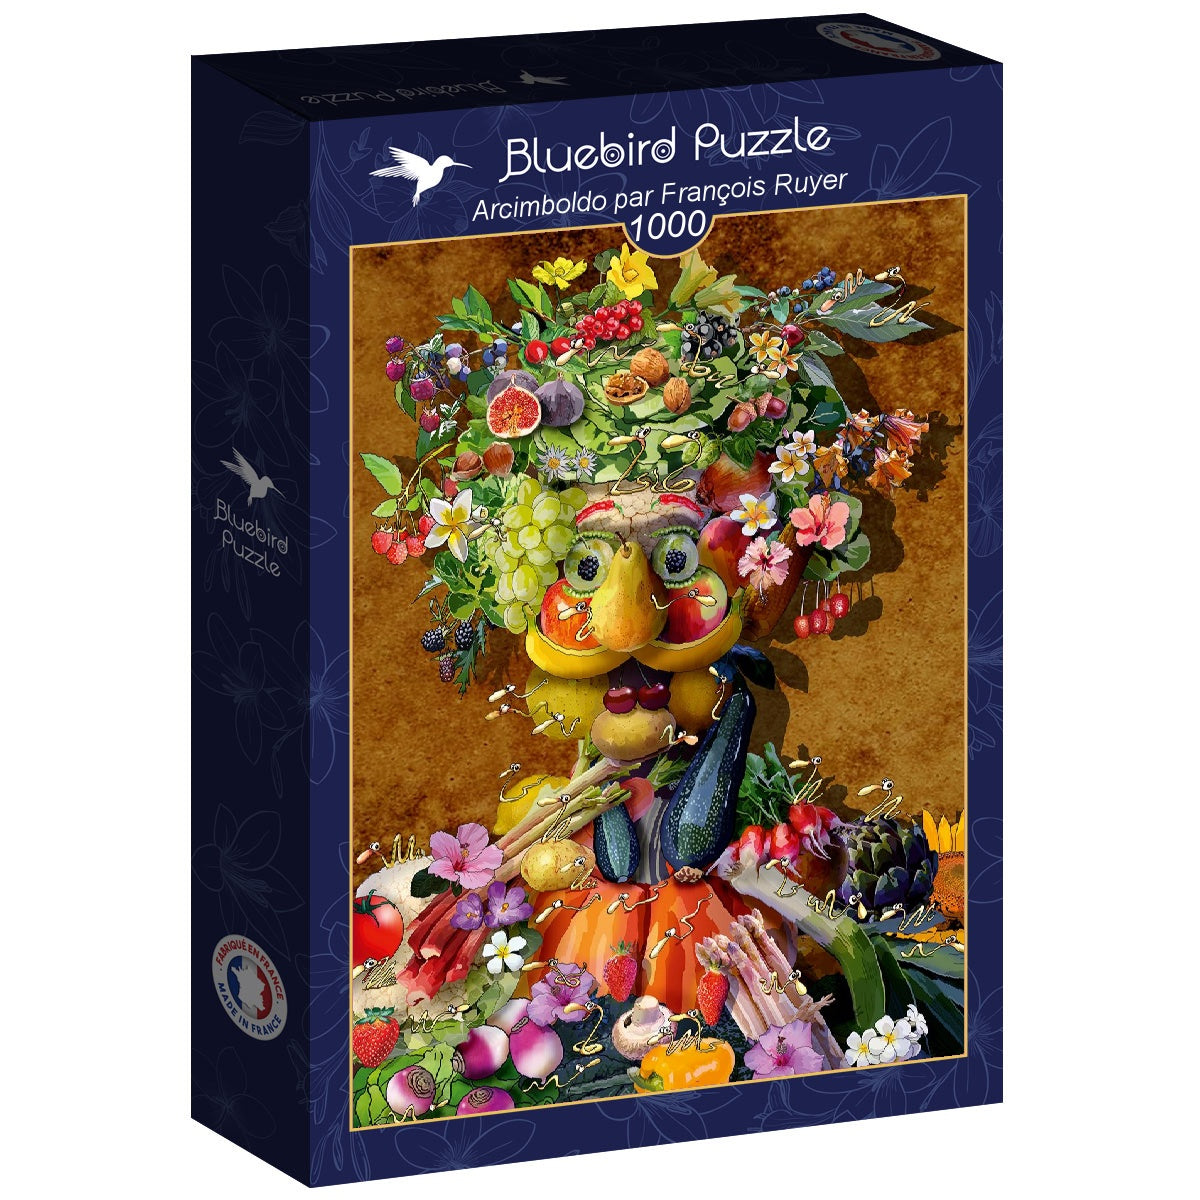 Bluebird Puzzle - Arcimboldo par François Ruyer - 1000 Piece Jigsaw Puzzle